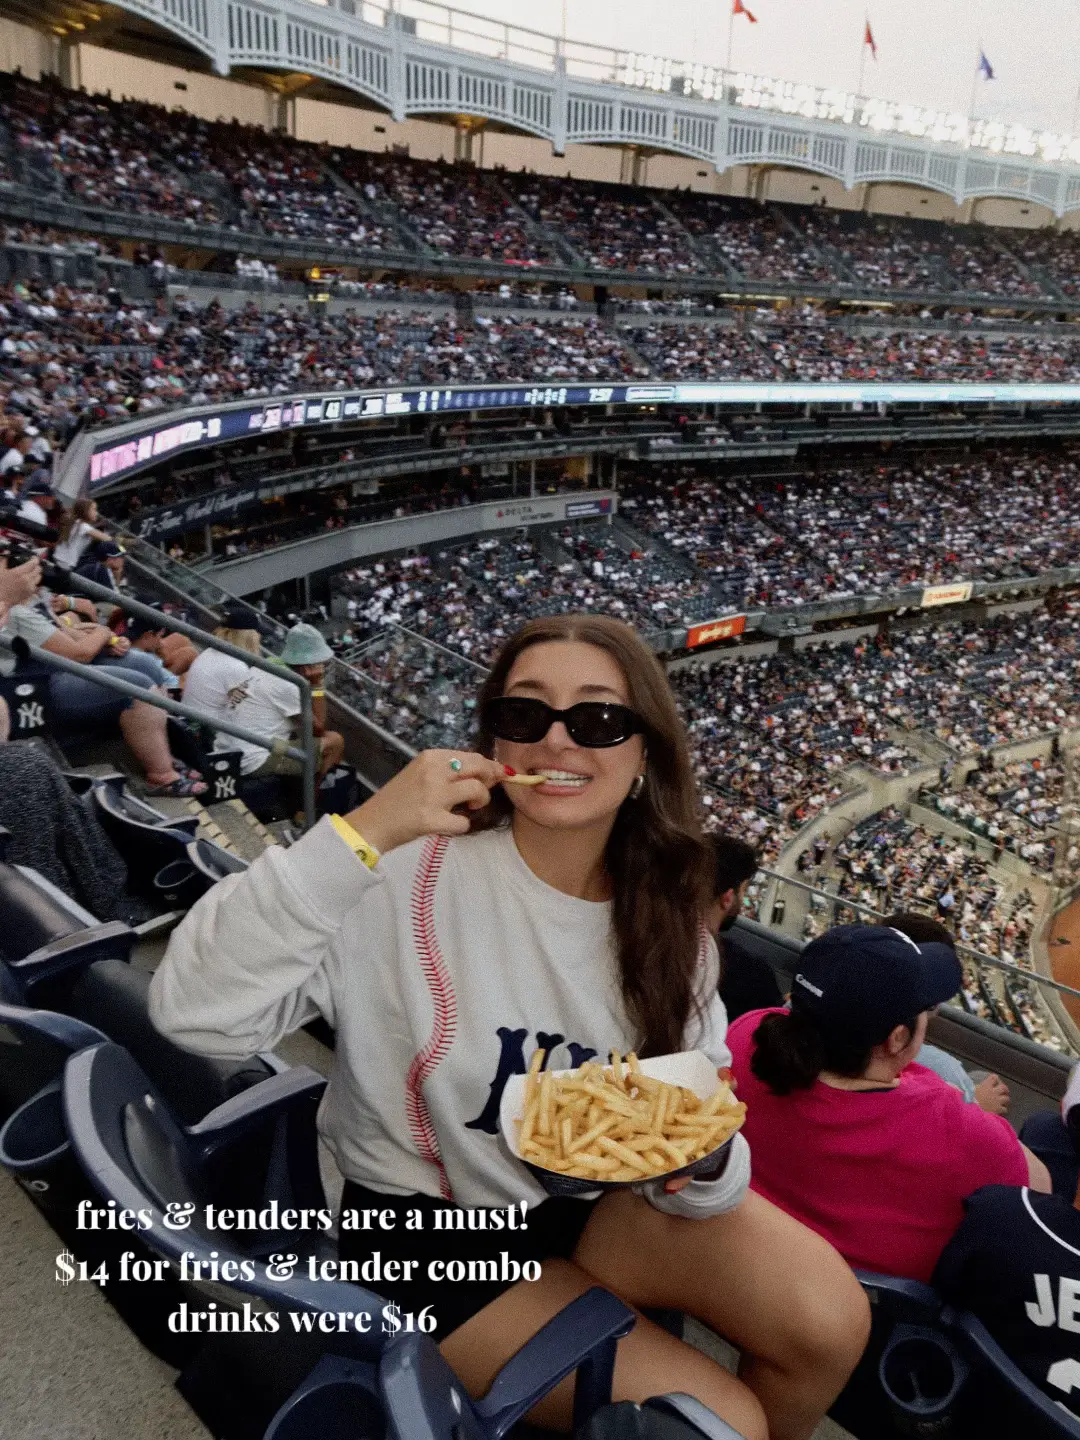 Met/Ranger fan meets Yankee Stadium, Article posted by AnnaRose